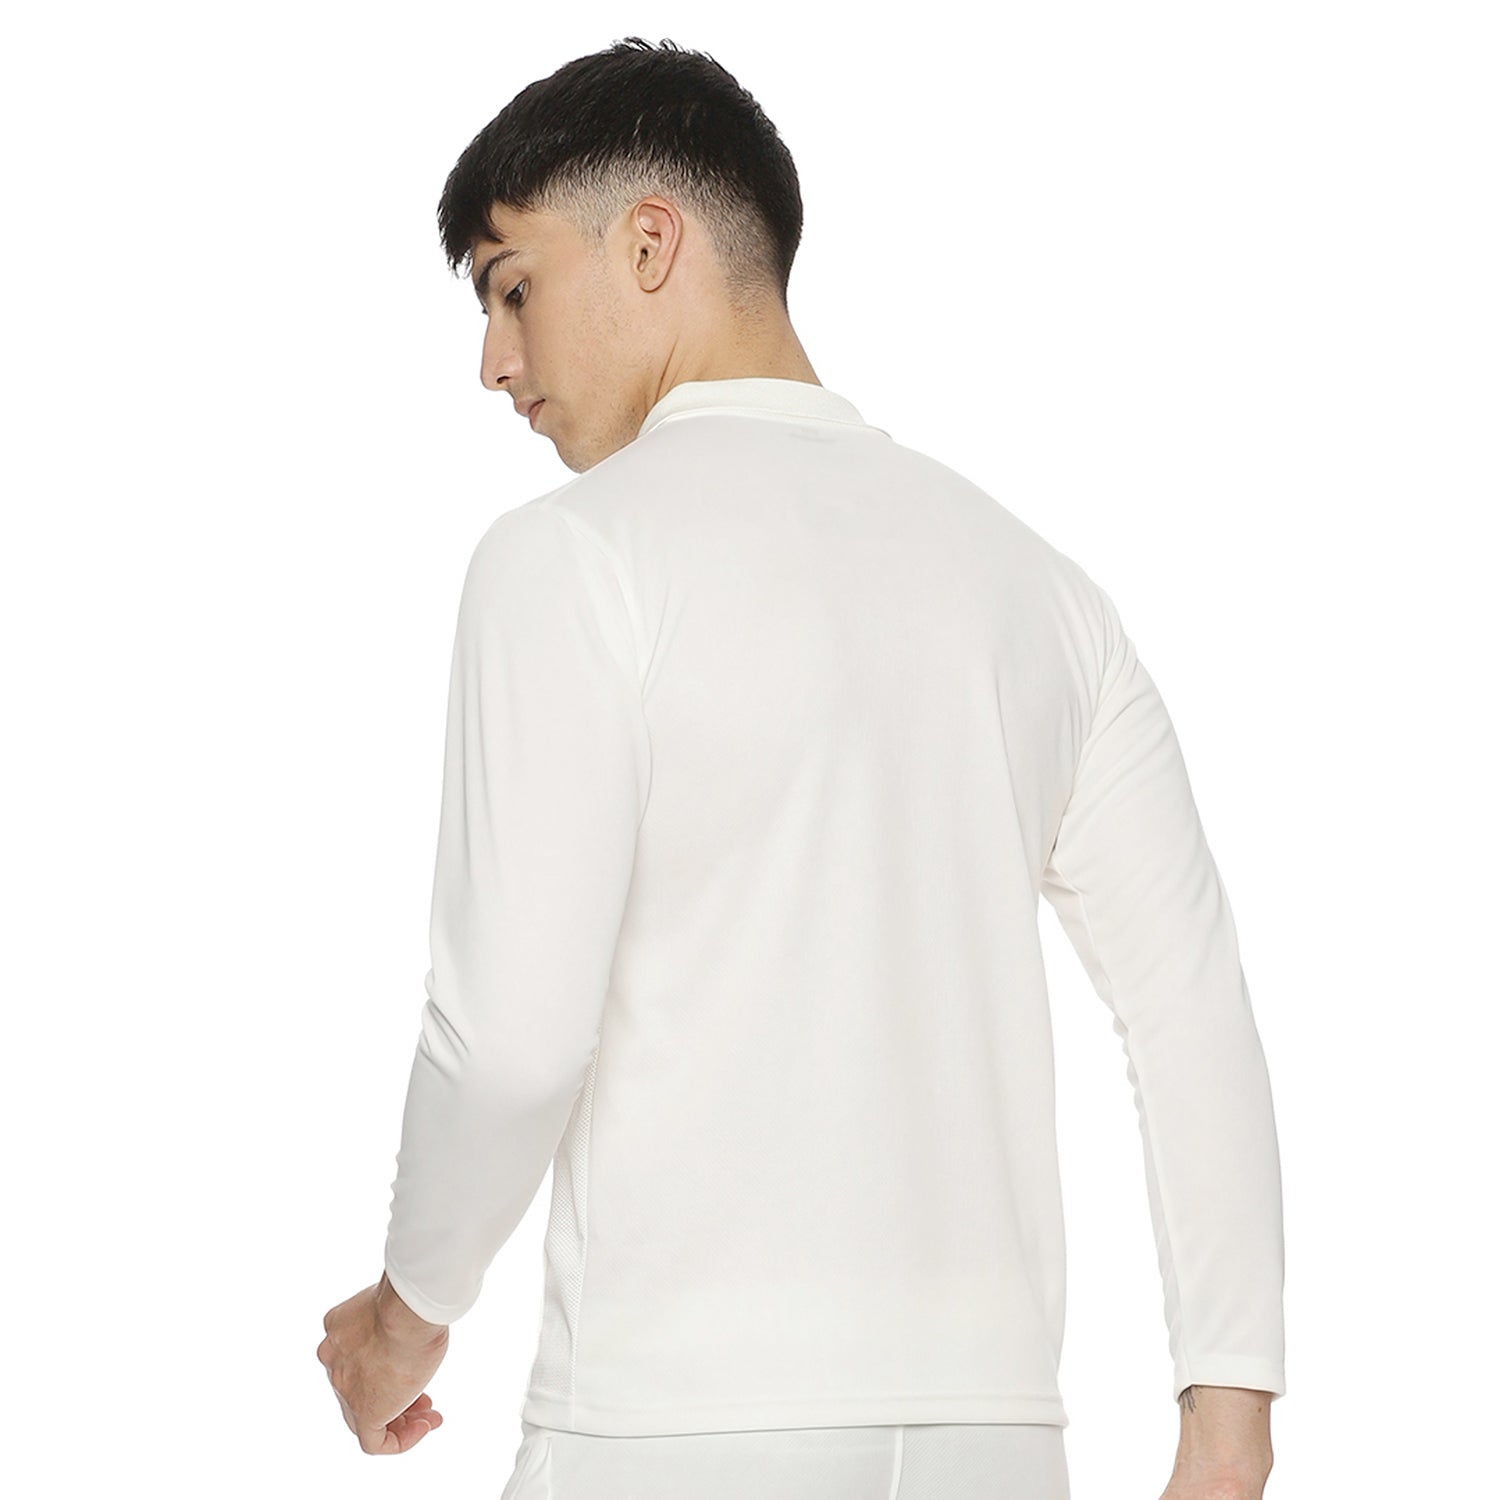 Prokick Club Full Sleeves Cricket T-Shirt, Off White - Best Price online Prokicksports.com